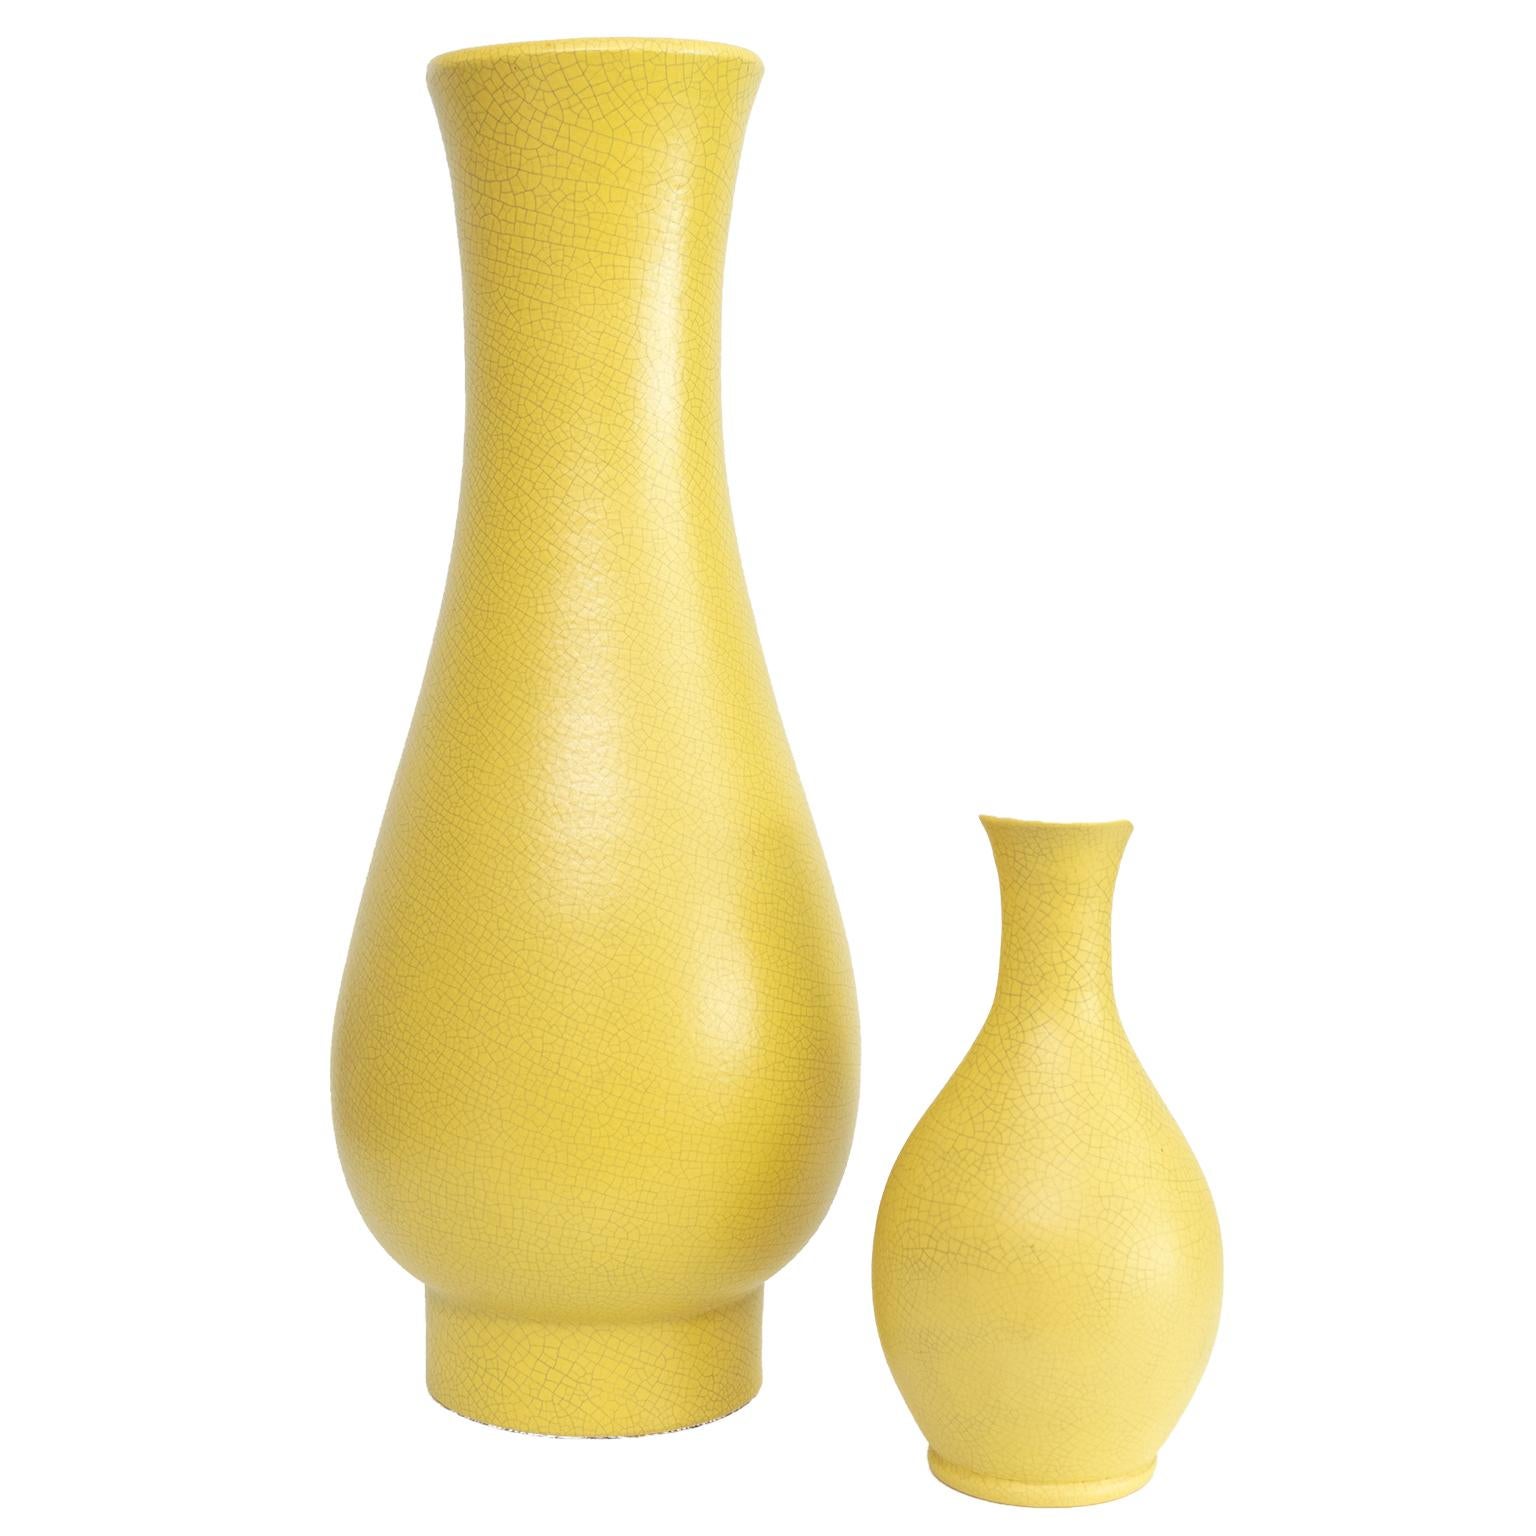 Swedish Art Deco Ceramic Vases in Yellow Crackle Glaze by Artist Ewald Dahlskog For Sale